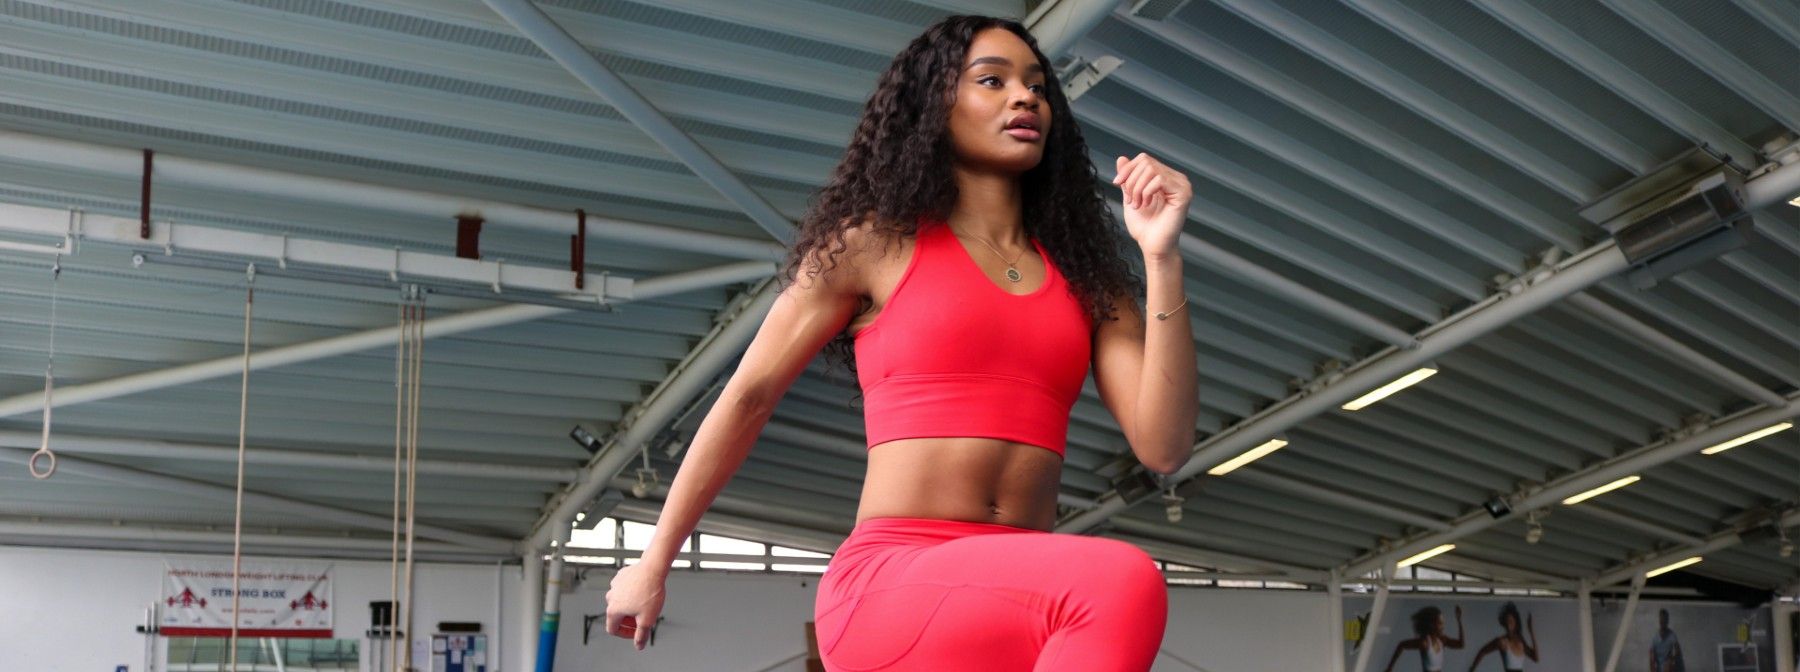 Run Like An Olympian | Sprint and Power Workout With Imani-Lara Lansiquot 